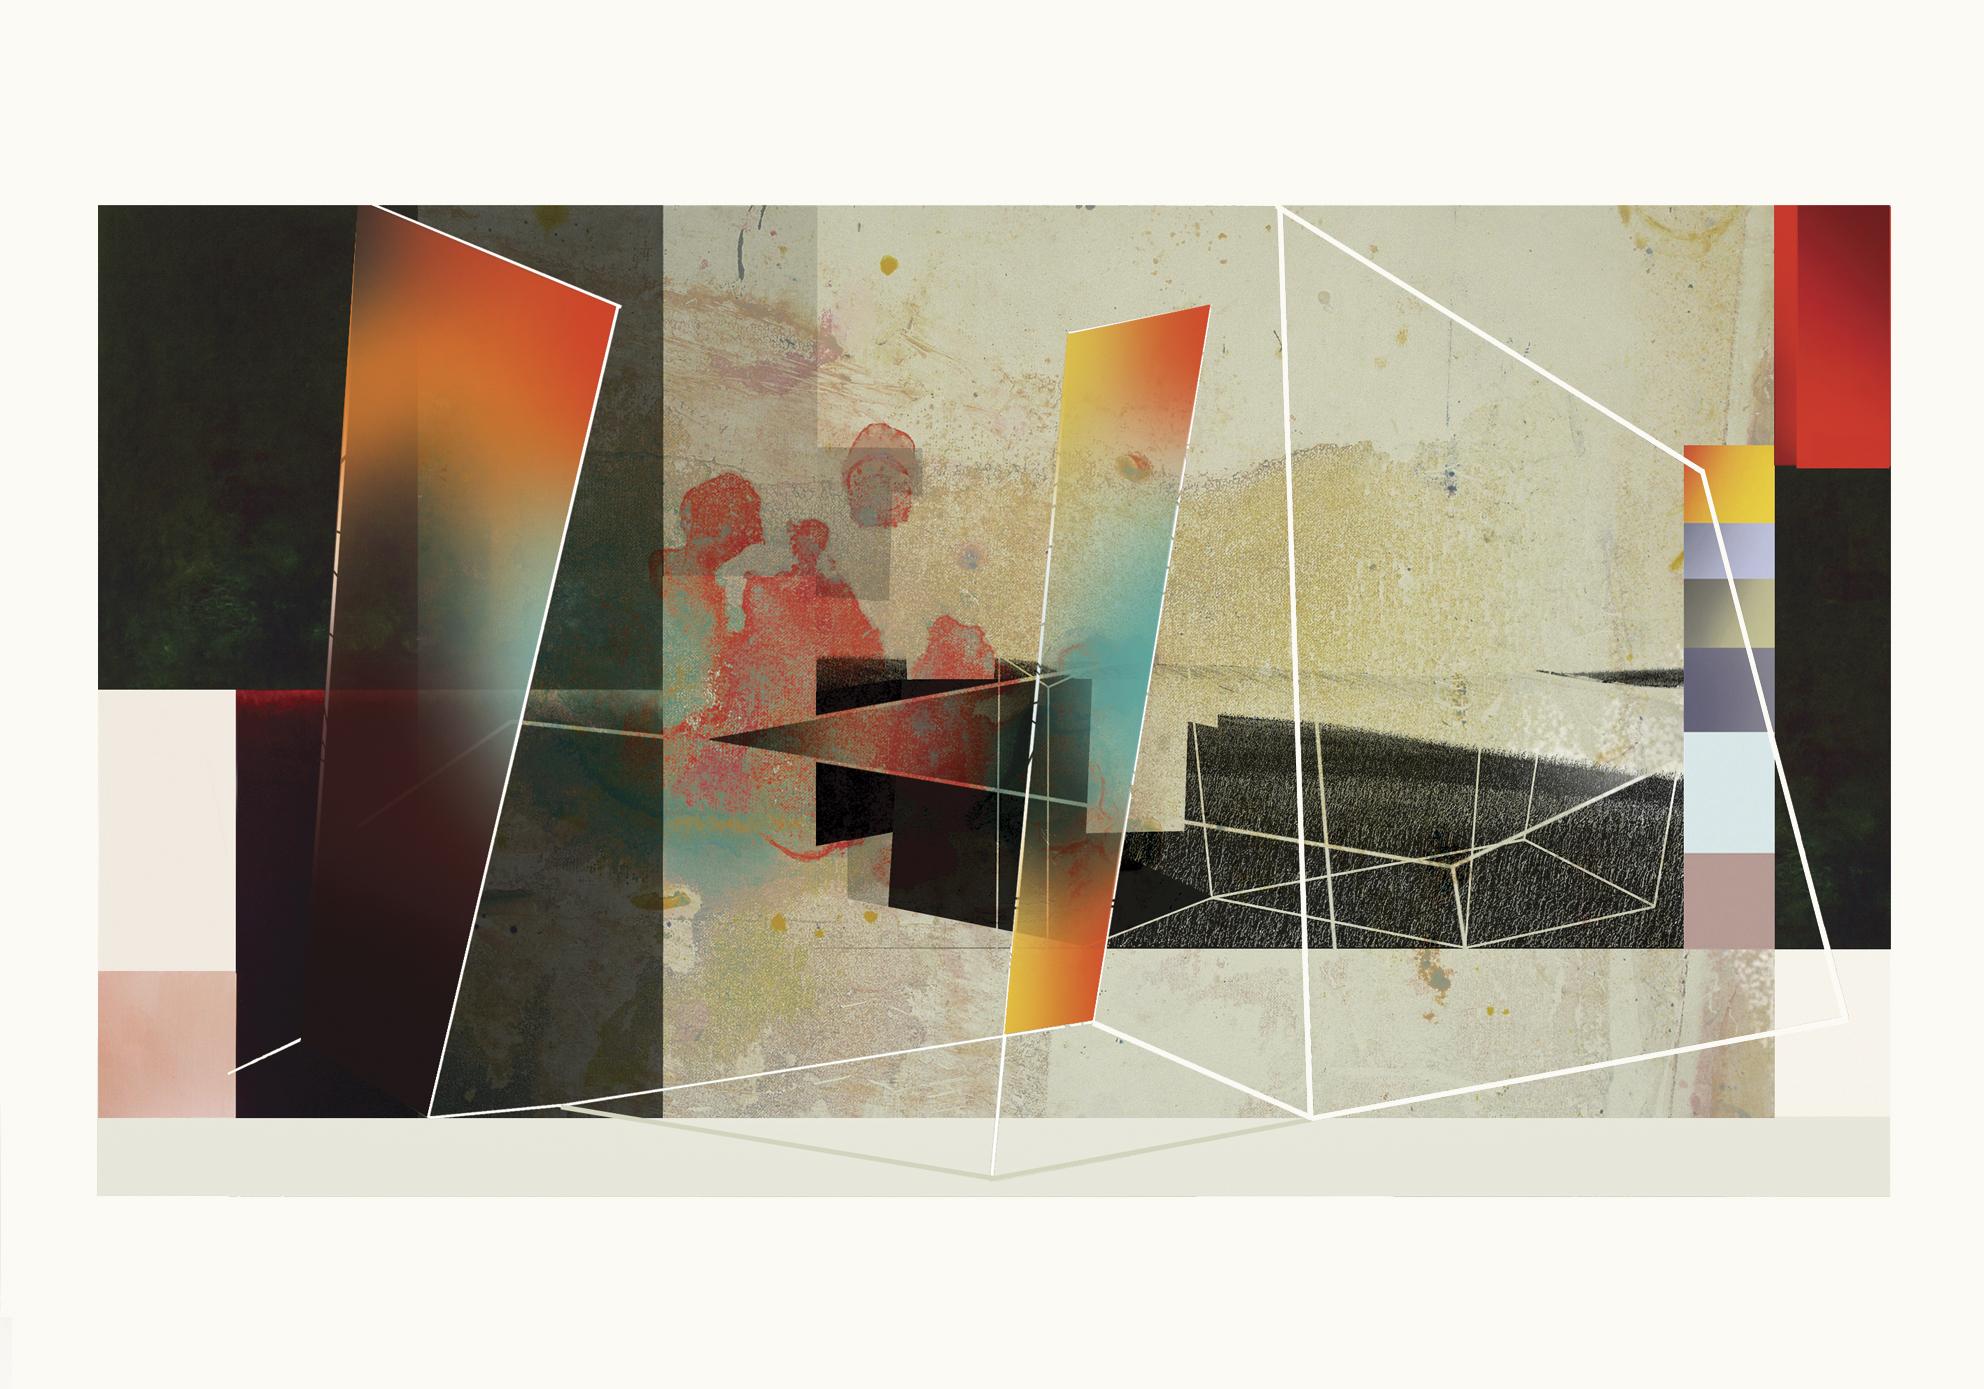 Francisco Nicolás Abstract Print - Casa 2 - Contemporary, Abstract, Pop art, Surrealist, geometric, landscape 